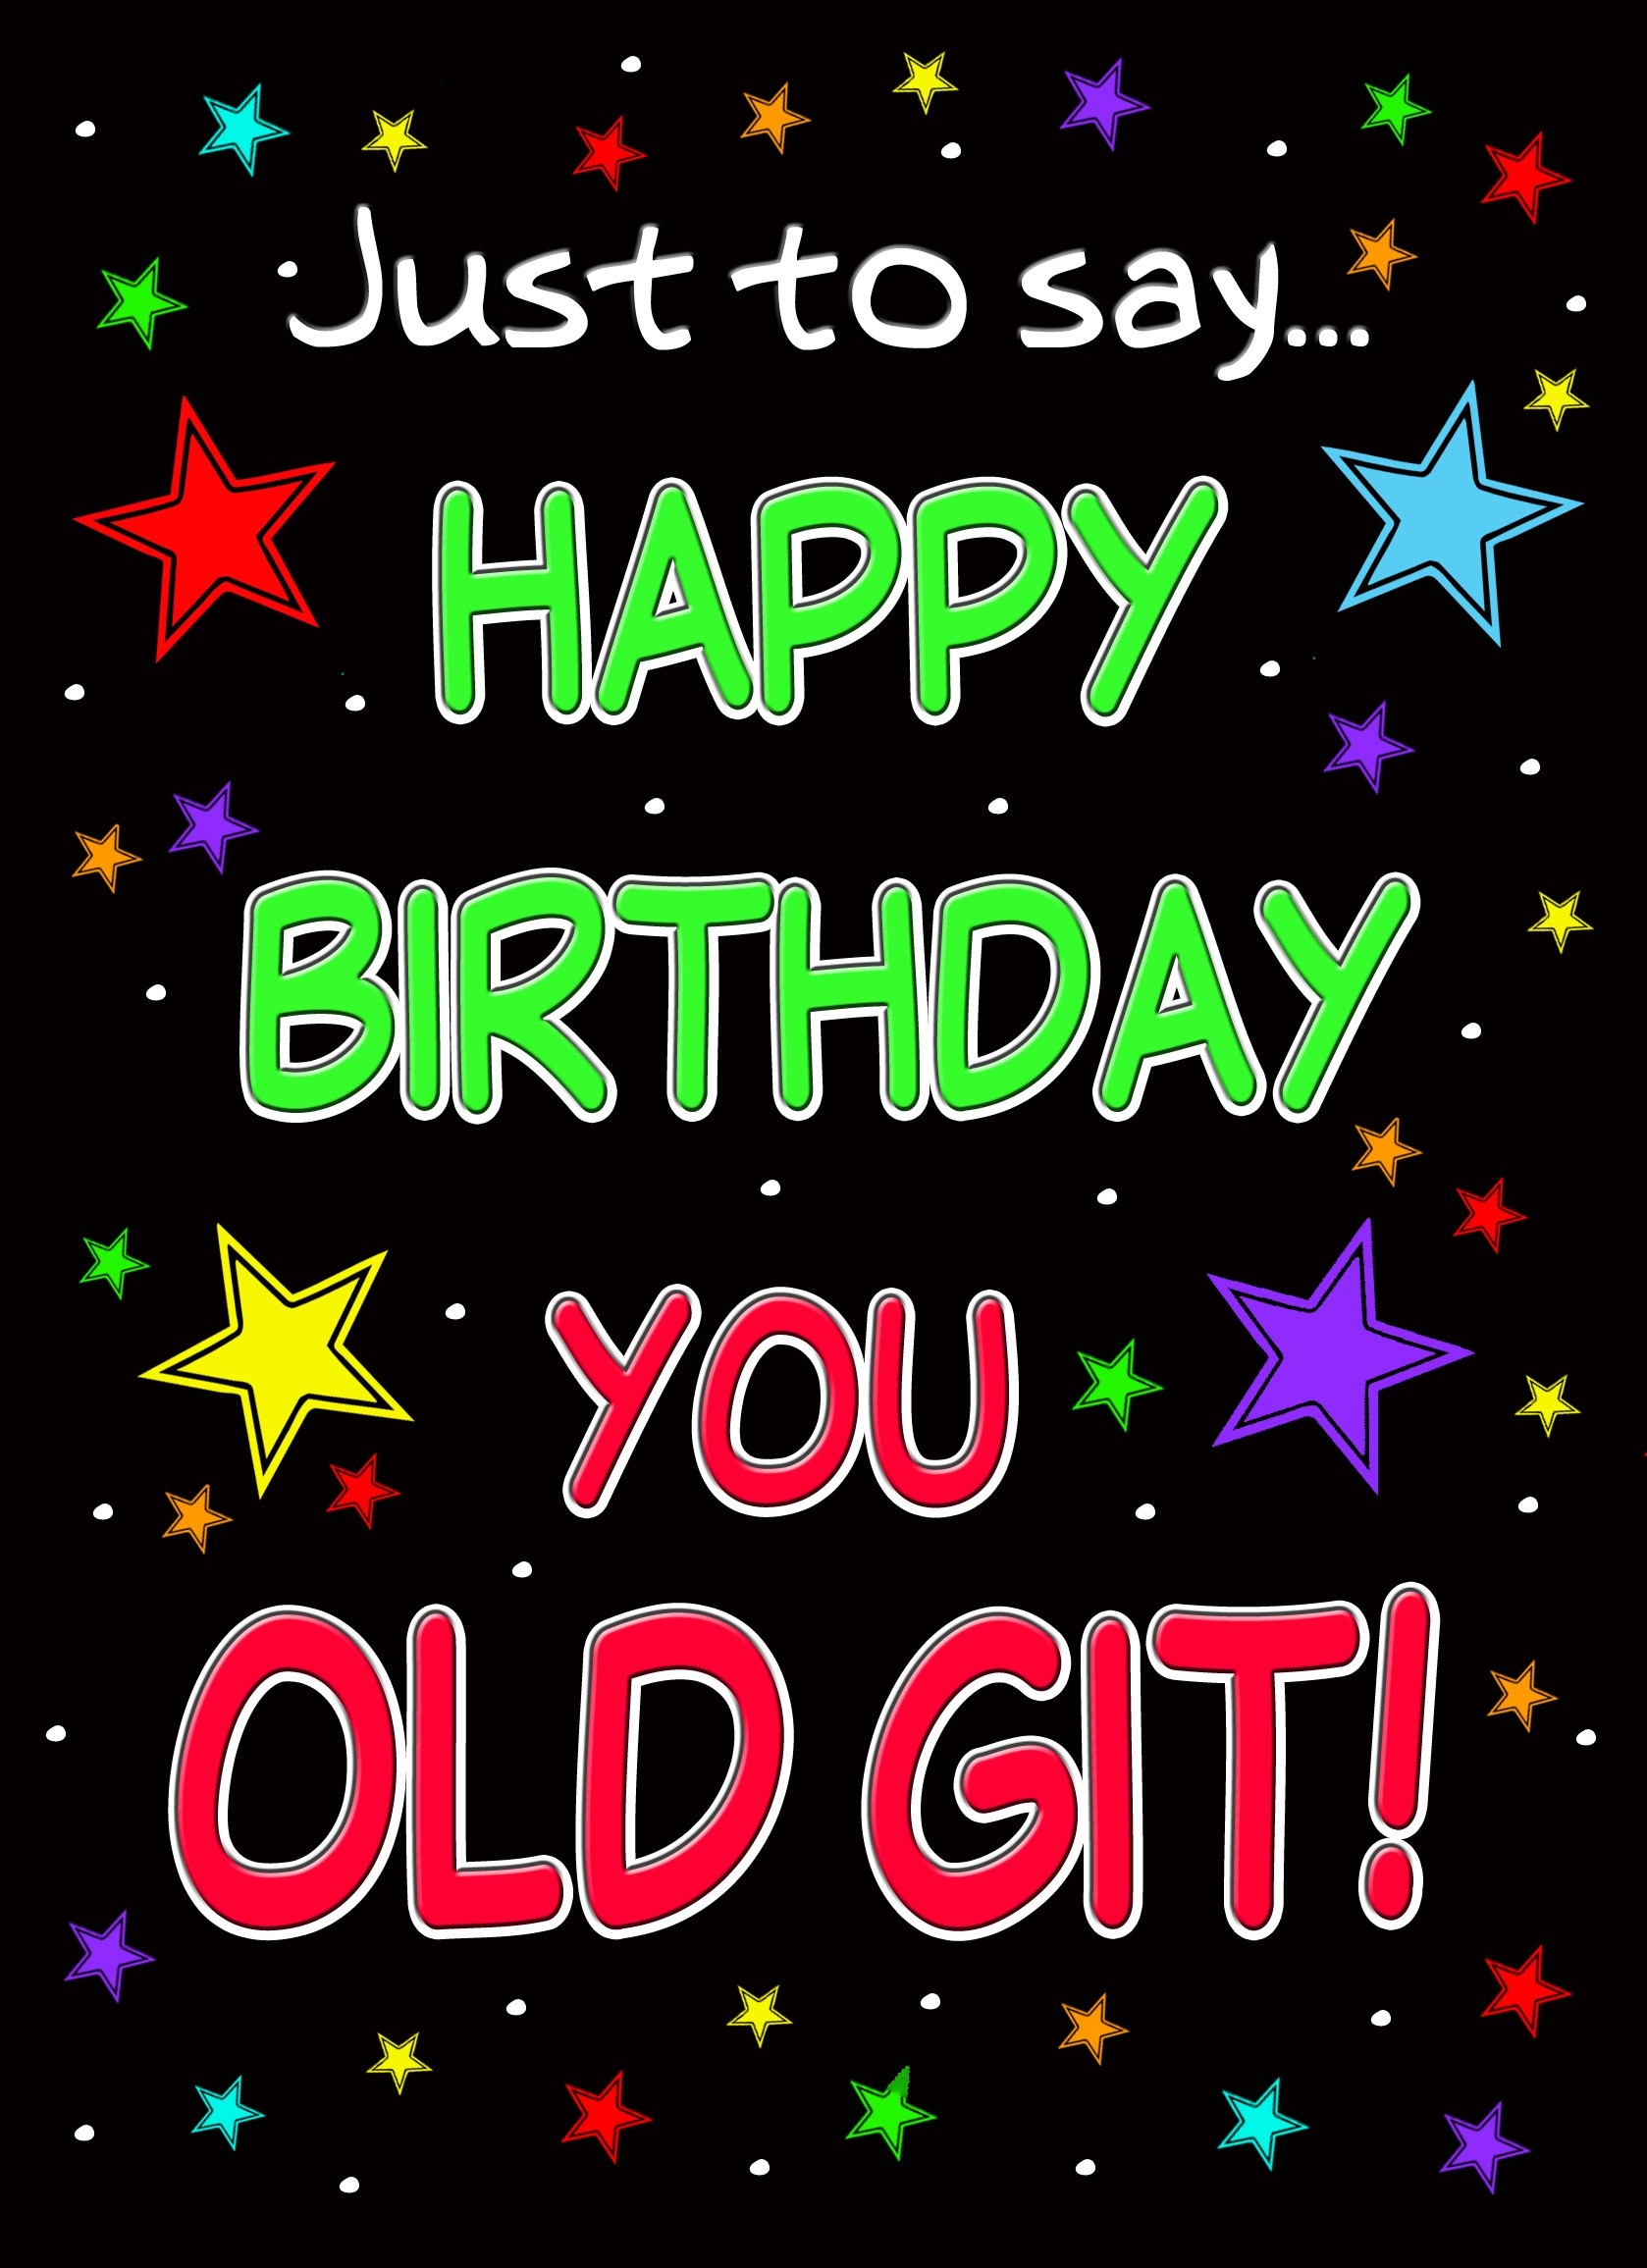 Funny Birthday Card Old Git